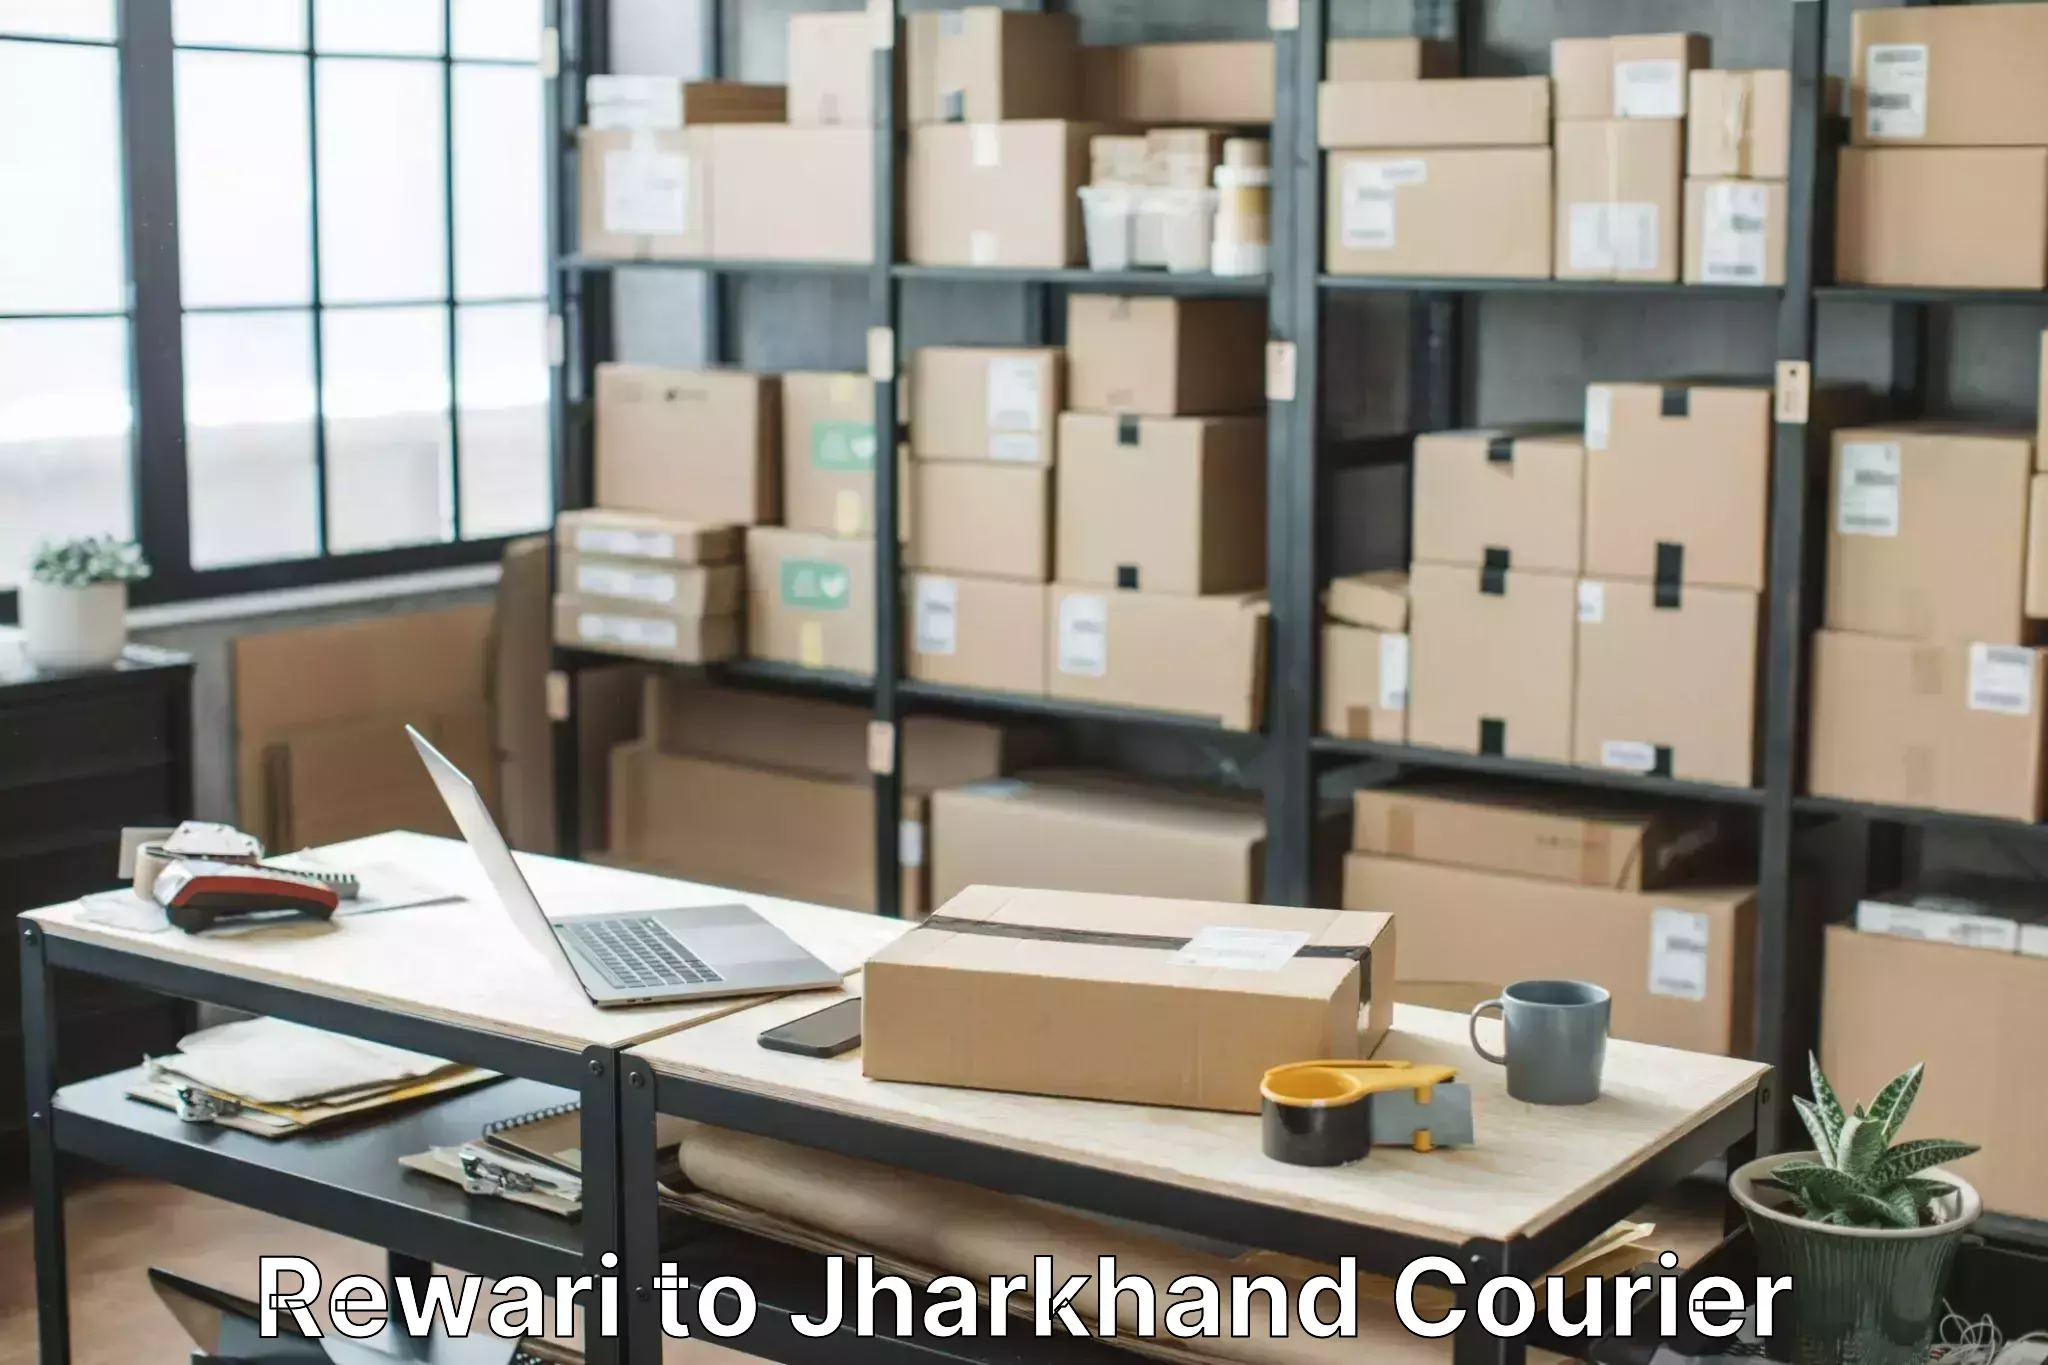 Professional moving company Rewari to Jharkhand